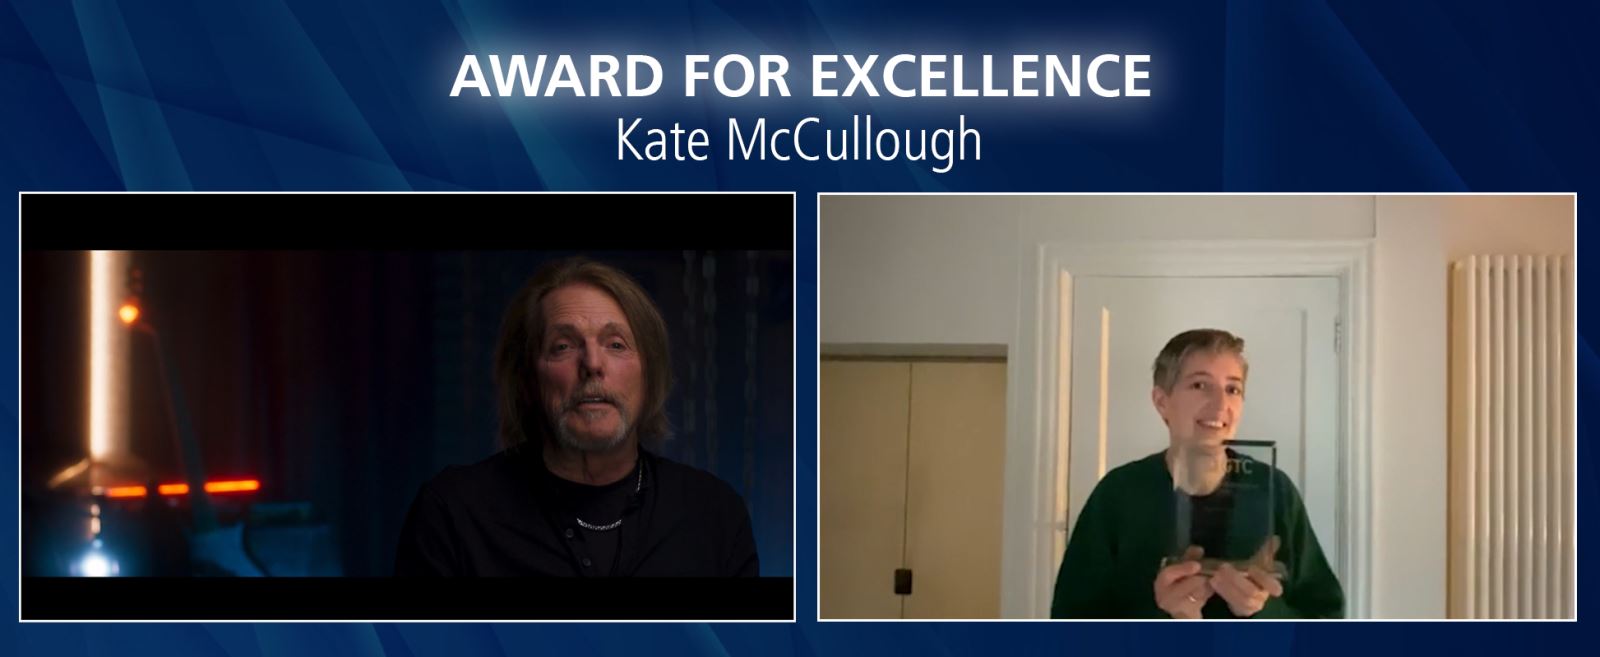 Award for Excellence - Kate McCullough